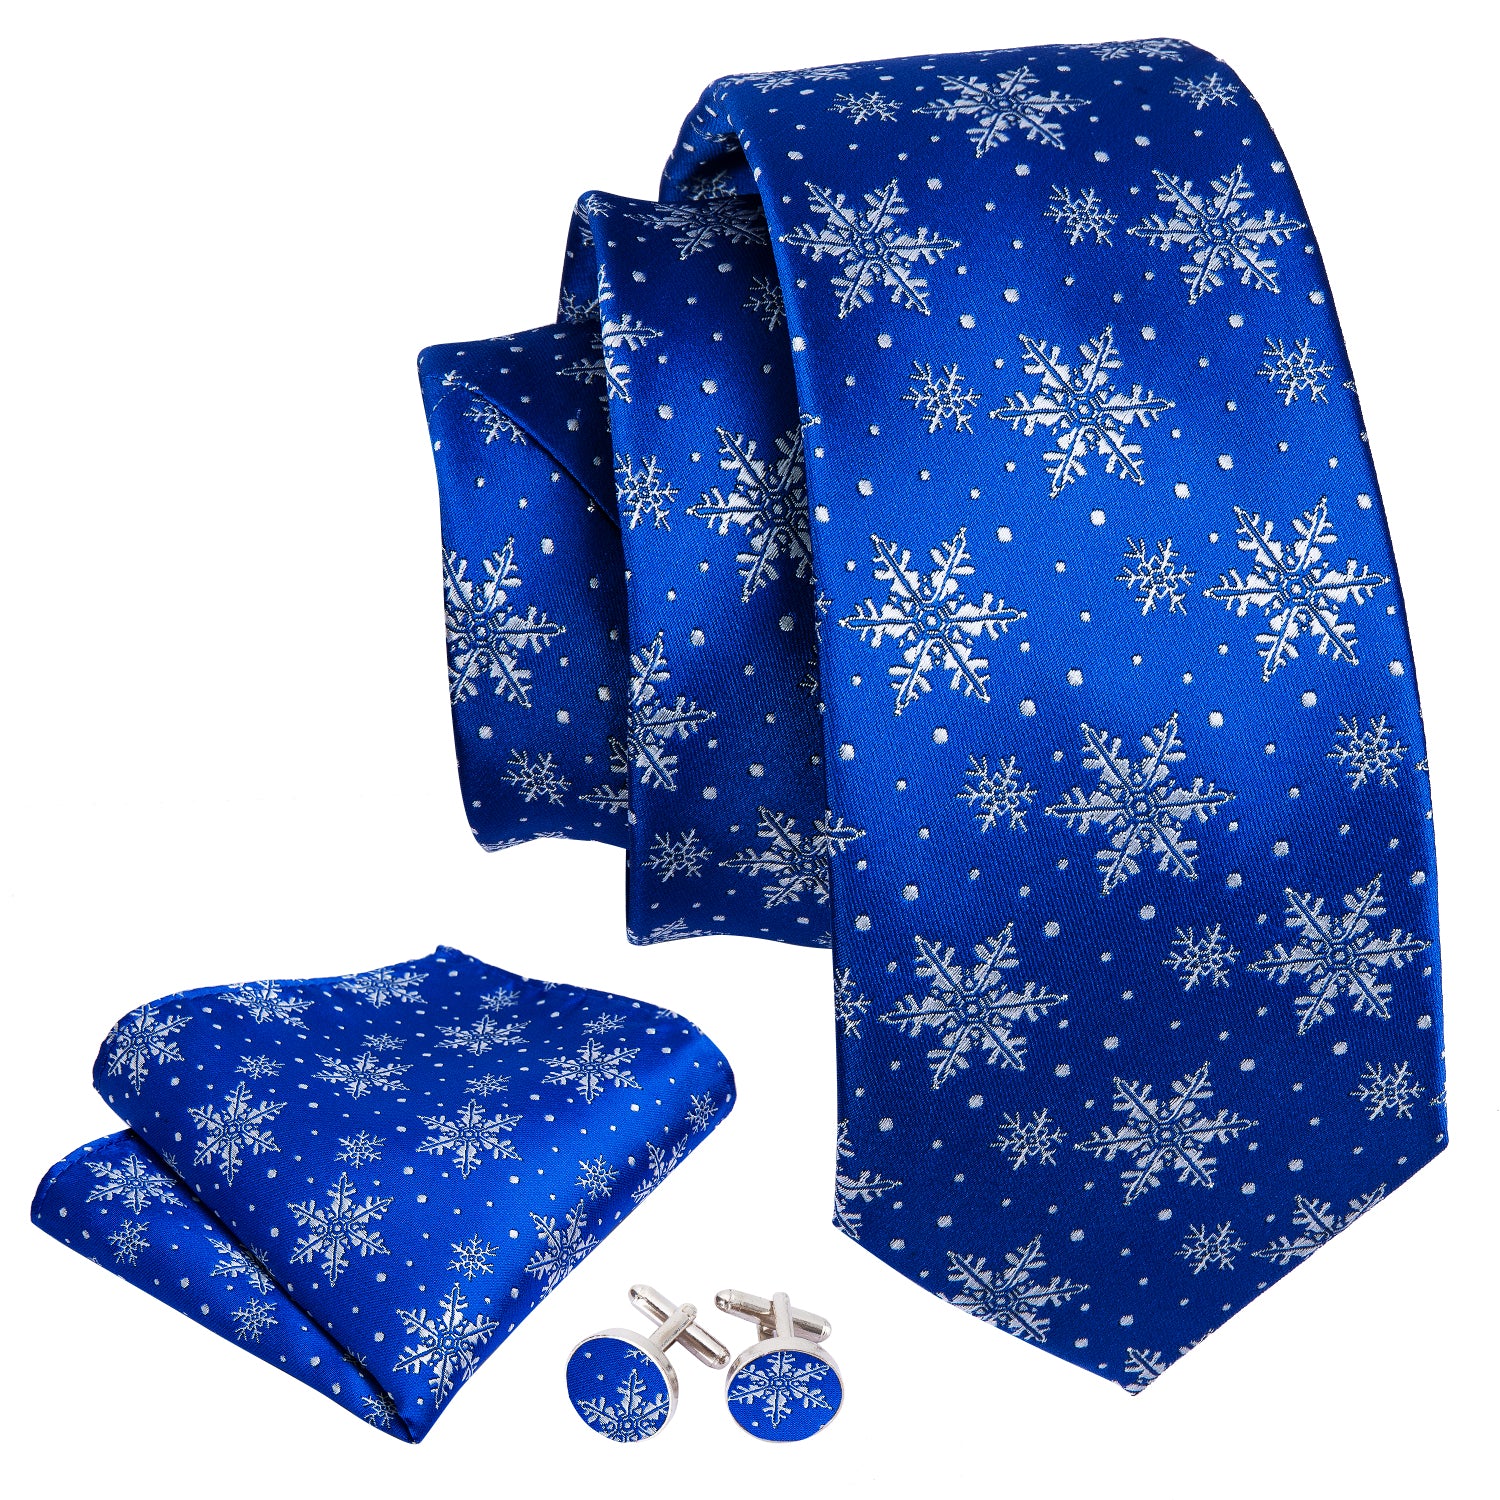 Barry.wang Christmas Tie Blue White Snowflake Silk Men's Tie Pocket Square Cufflinks Set